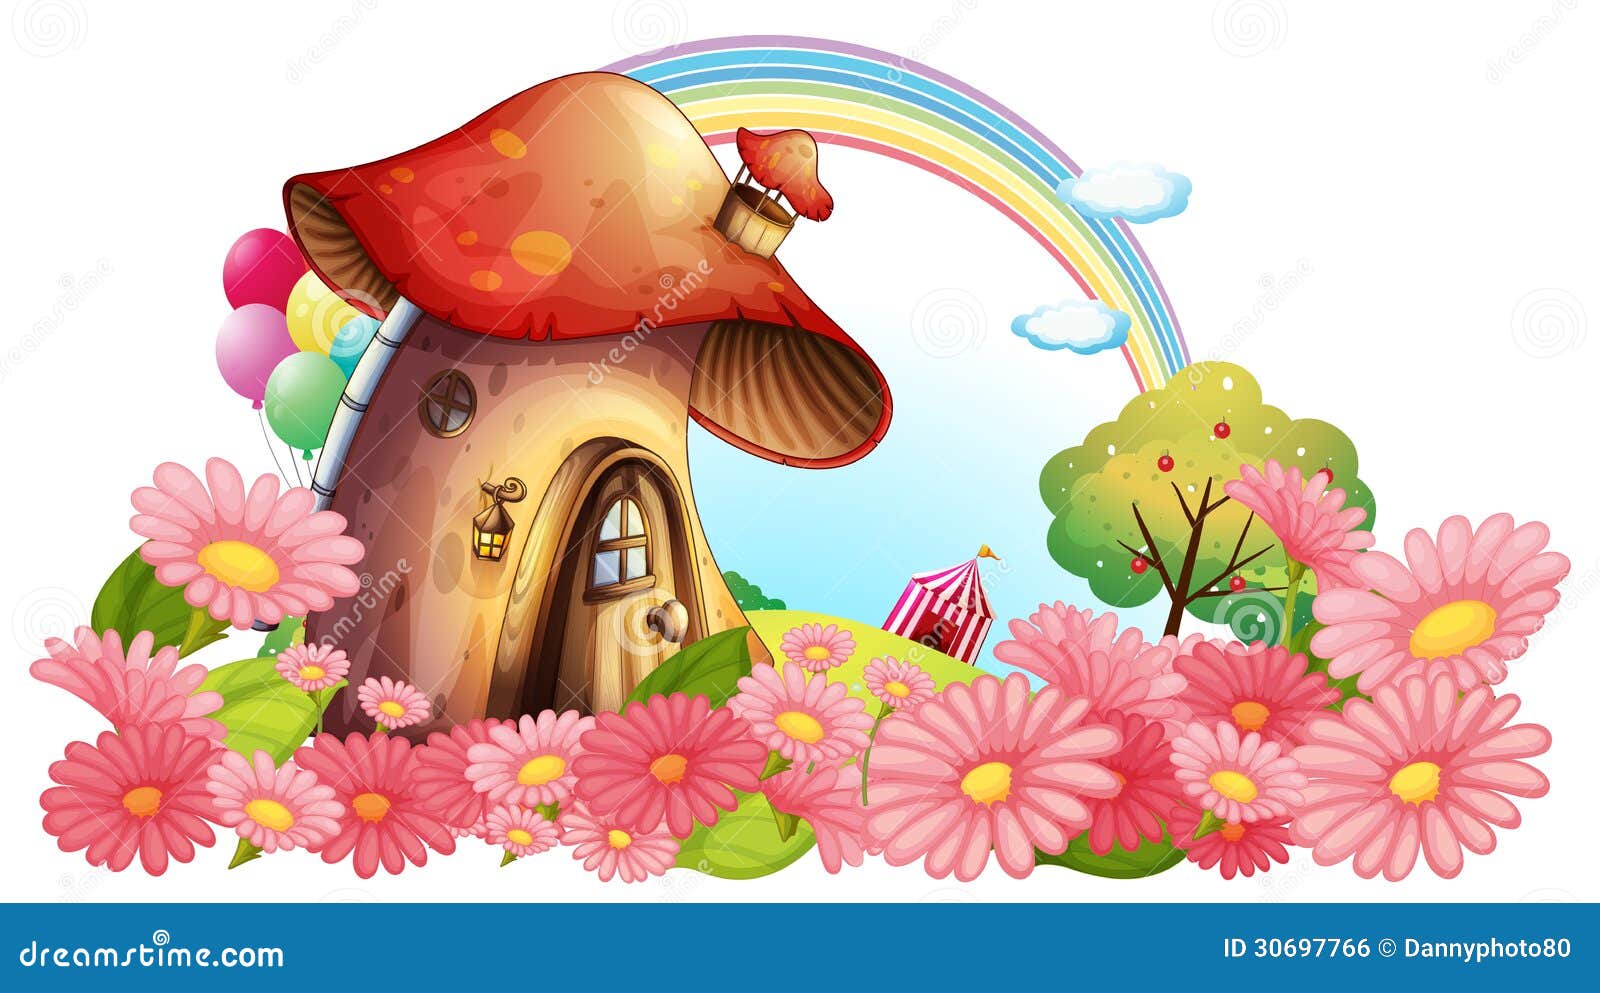 A Mushroom House with a Garden of Flowers Stock Vector ...